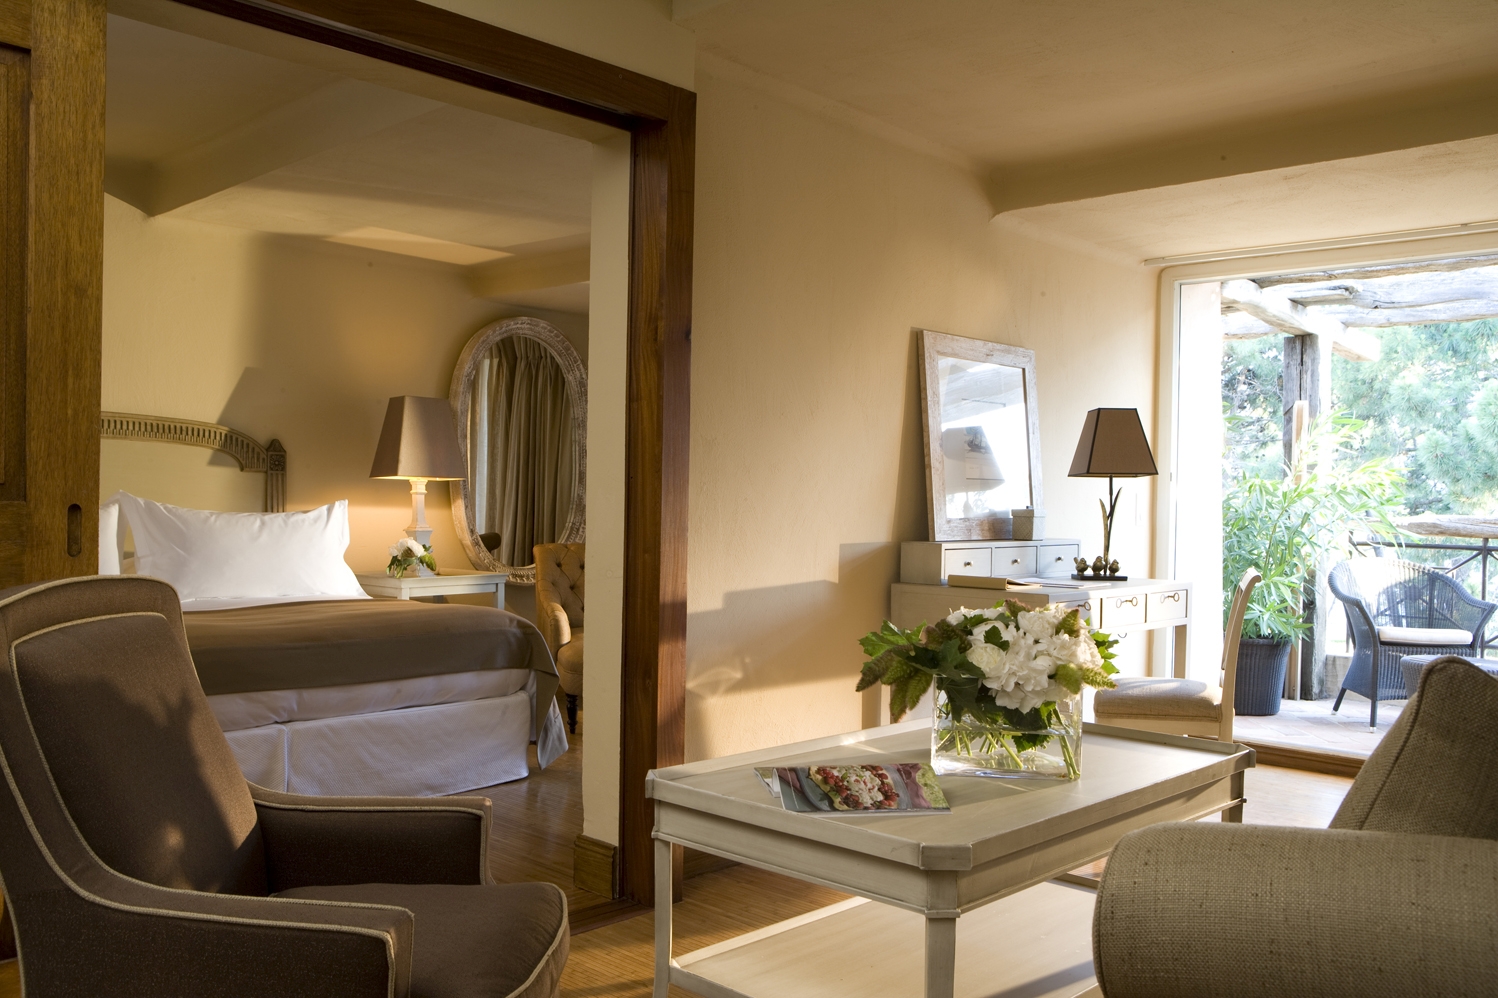 Pivoine Room at Grand Hotel de Cala Rossa in Corsica France